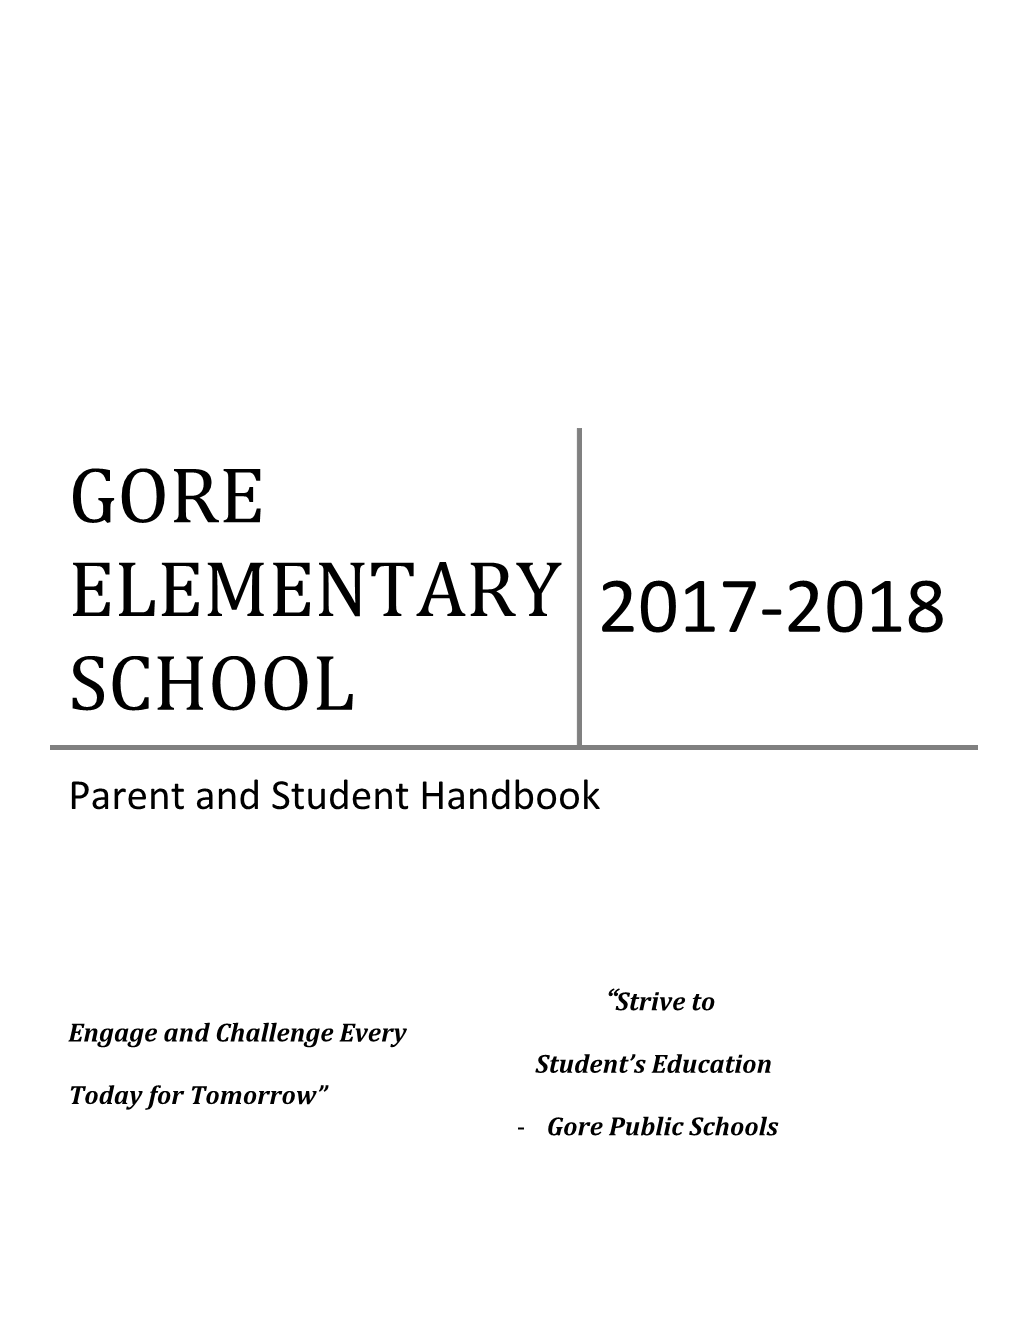 Gore Elementary School